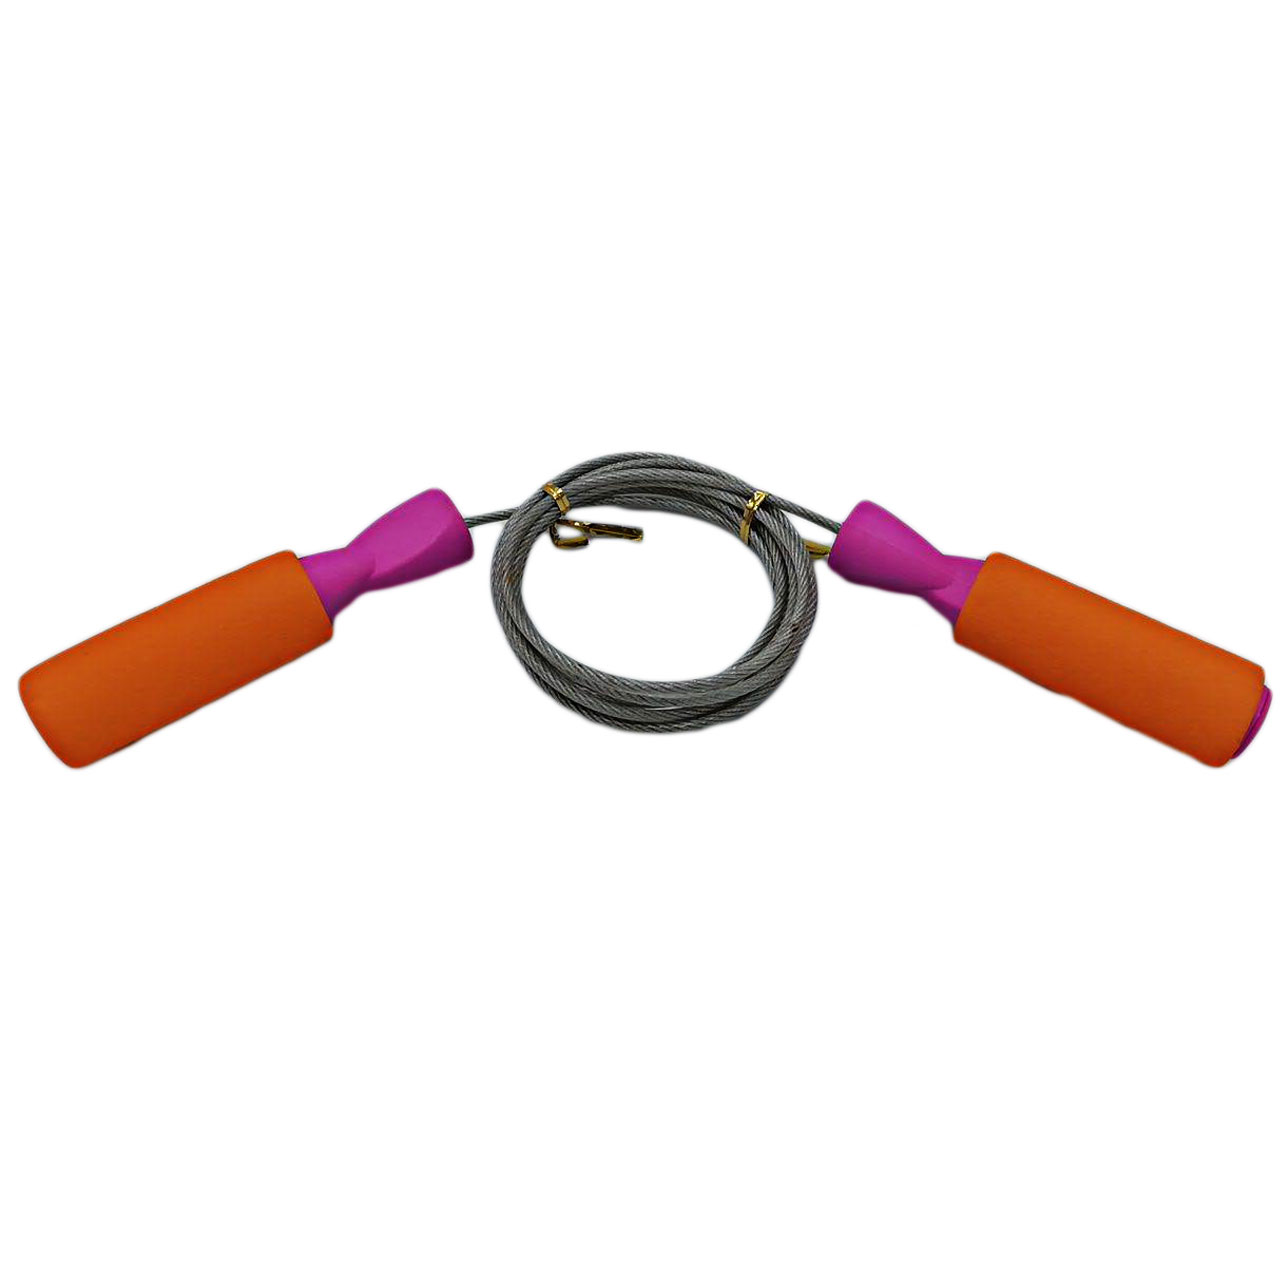  طناب ورزشی جینگ شونگ مدل Jump rope 878